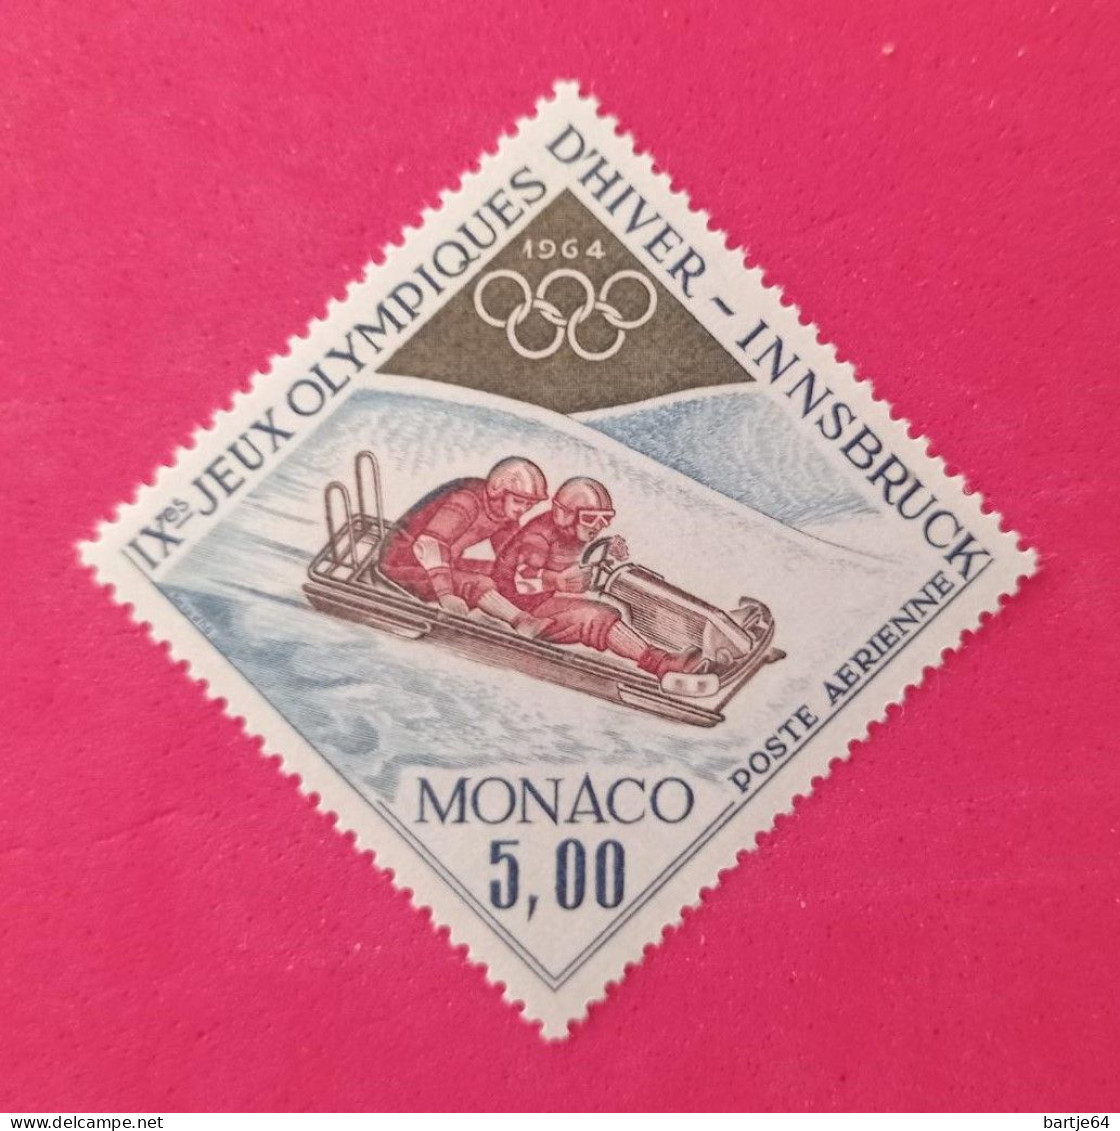 1964 Monaco - Stamp MNH - Invierno 1964: Innsbruck